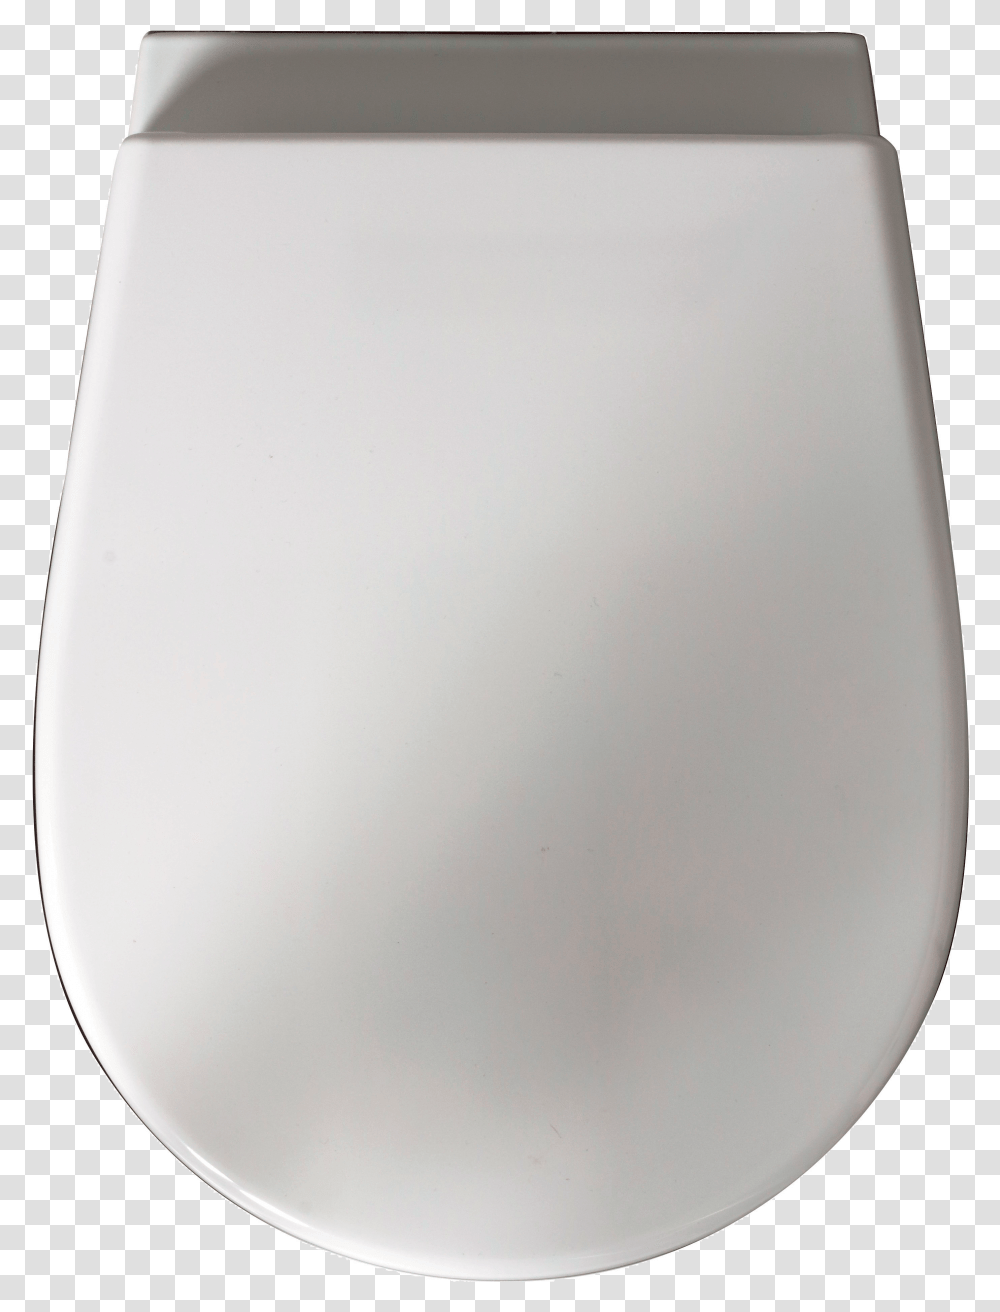 Toilet Seat Download Toilet Seat Transparent Png